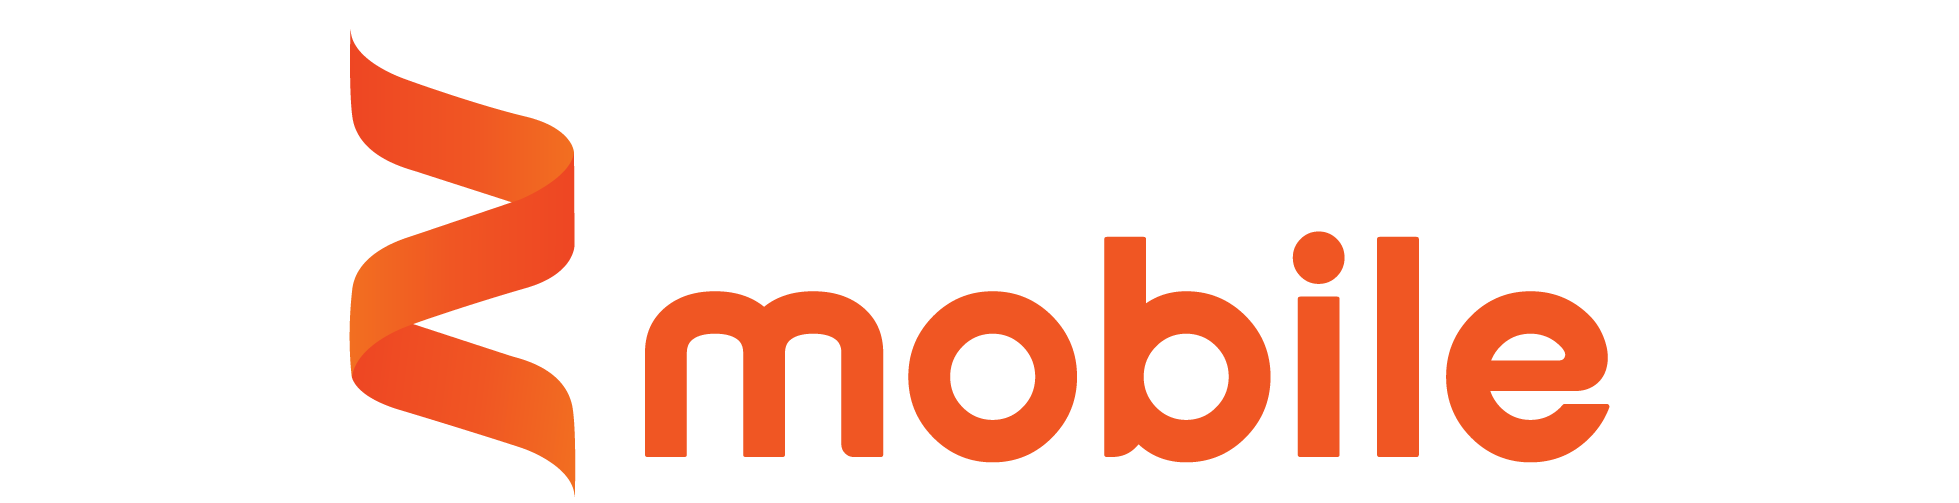 Purple Mobile